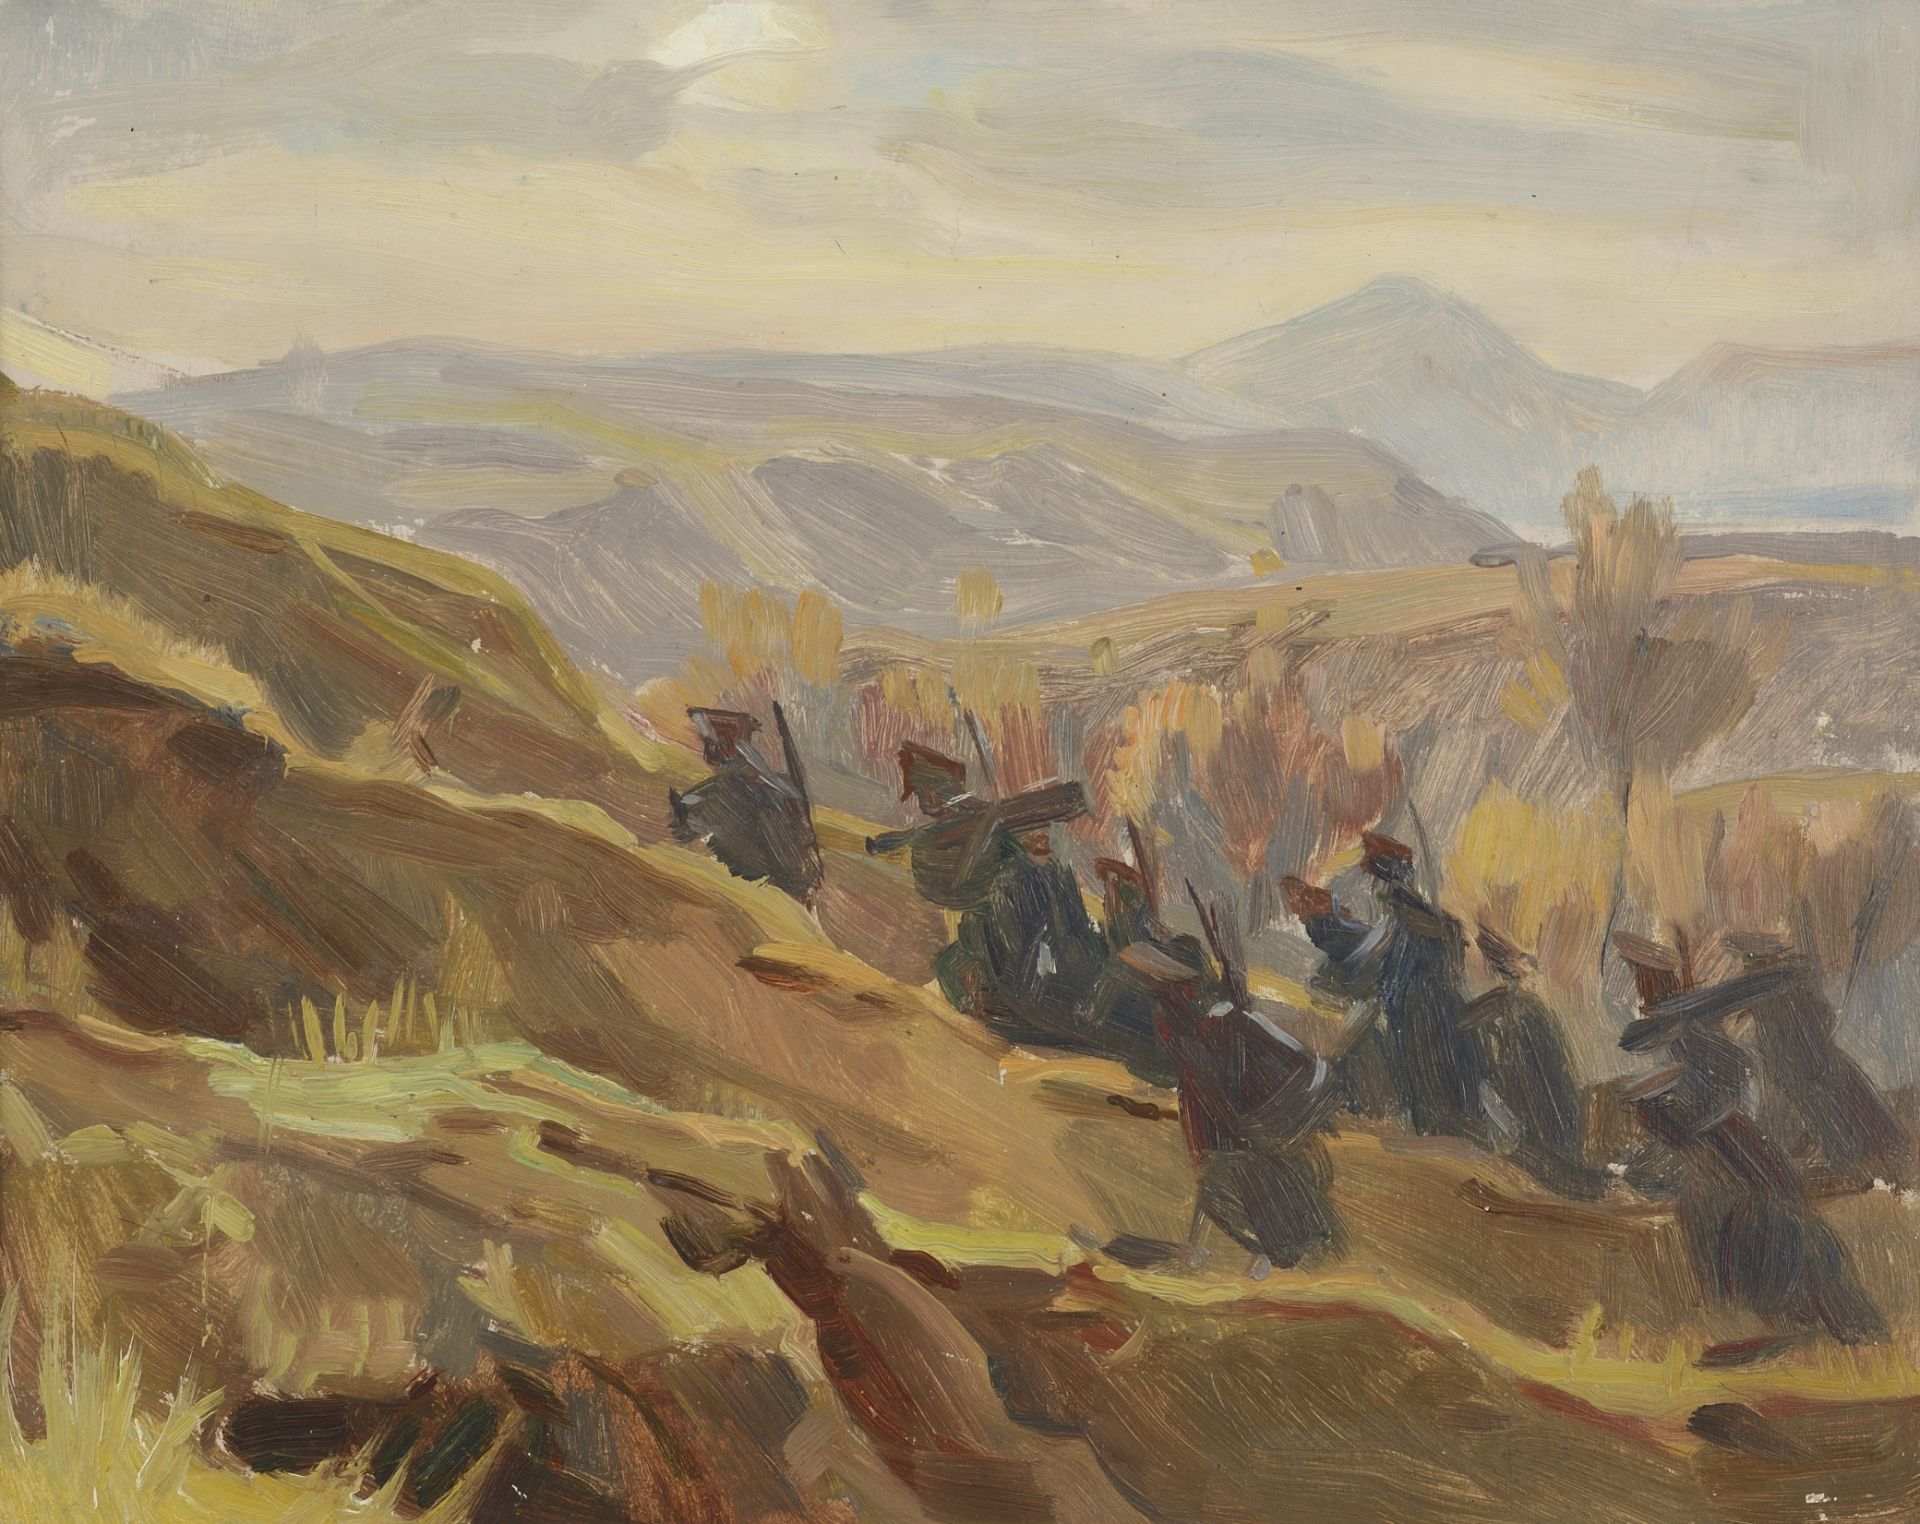 Dimitar Atanasov Gyuzhenov /1891-1979/  "To the battlefield"